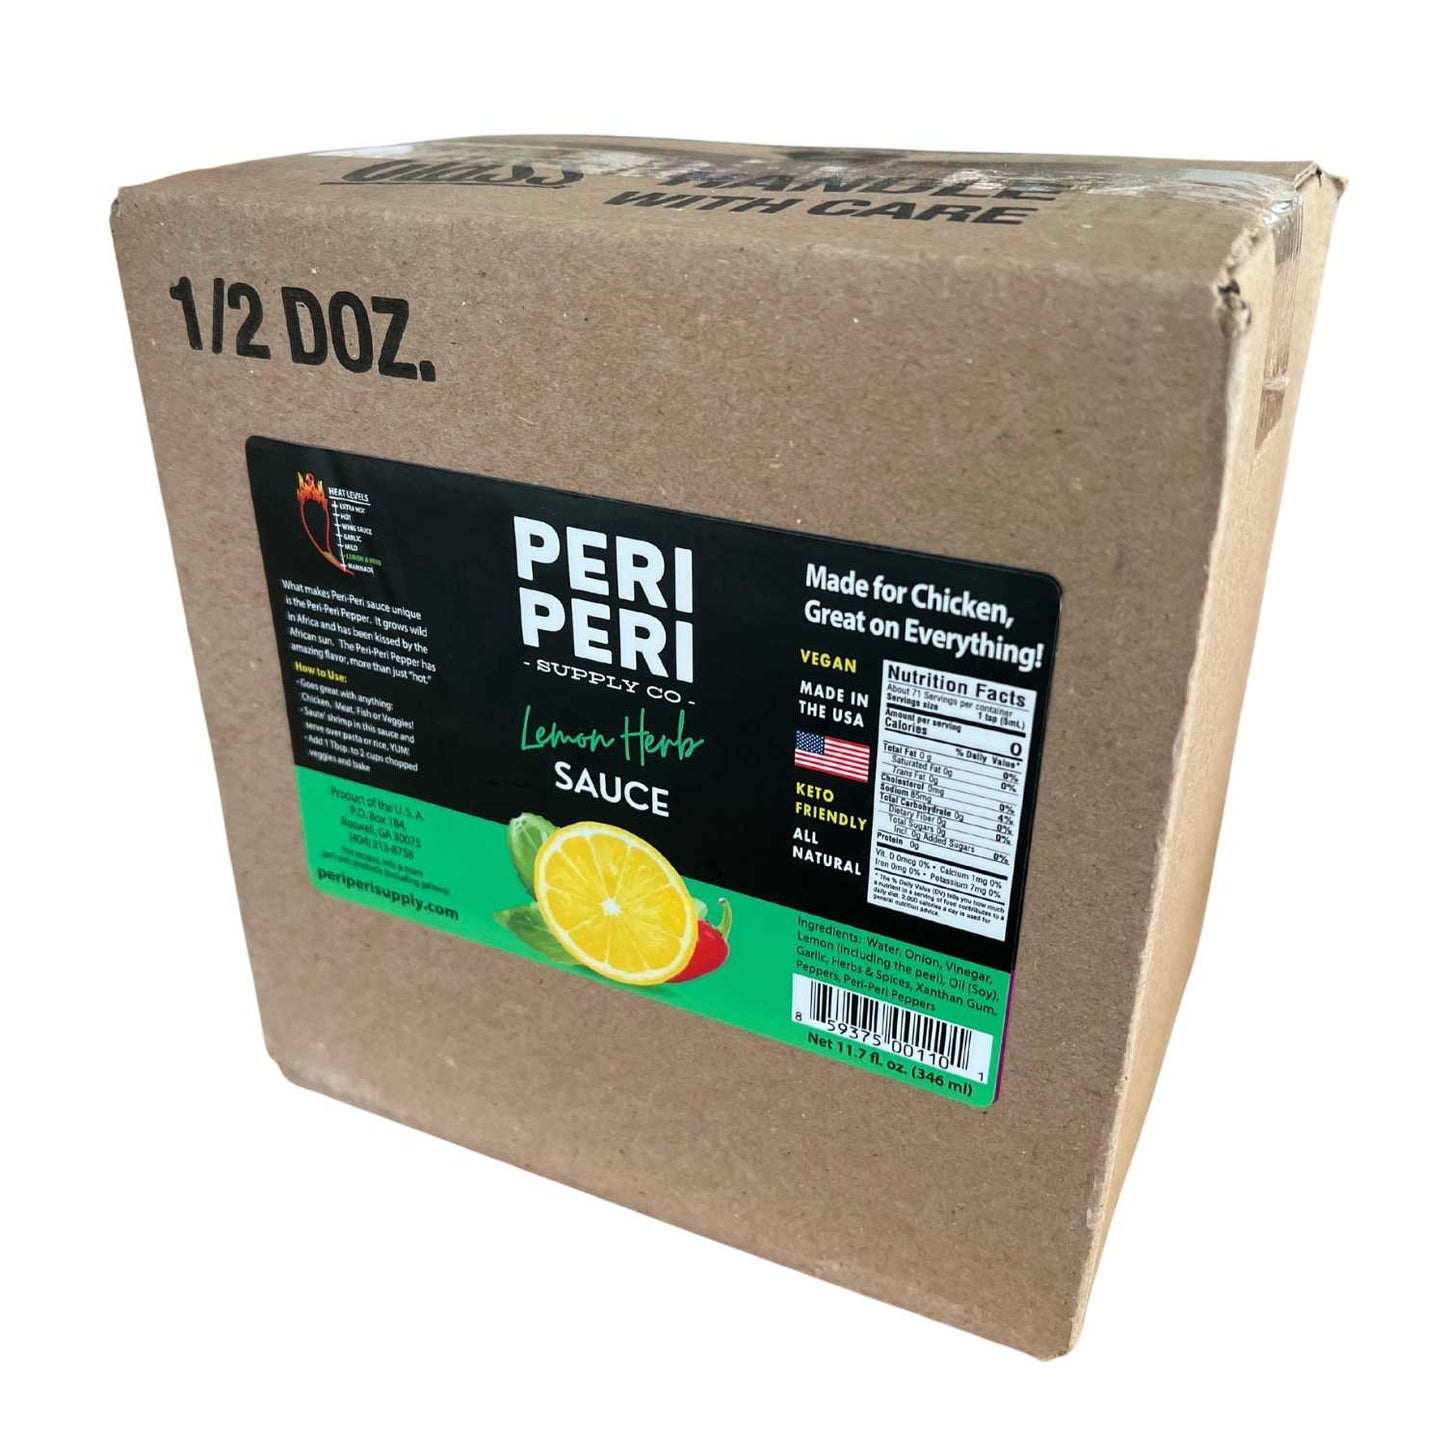 Lemon Herb Peri Peri sauce - Very Mild Heat level - Wholesale 4 Gallons per case, Vegan, Gluten Free, Sugar Free, Made in America, Keto and Paleo Friendly